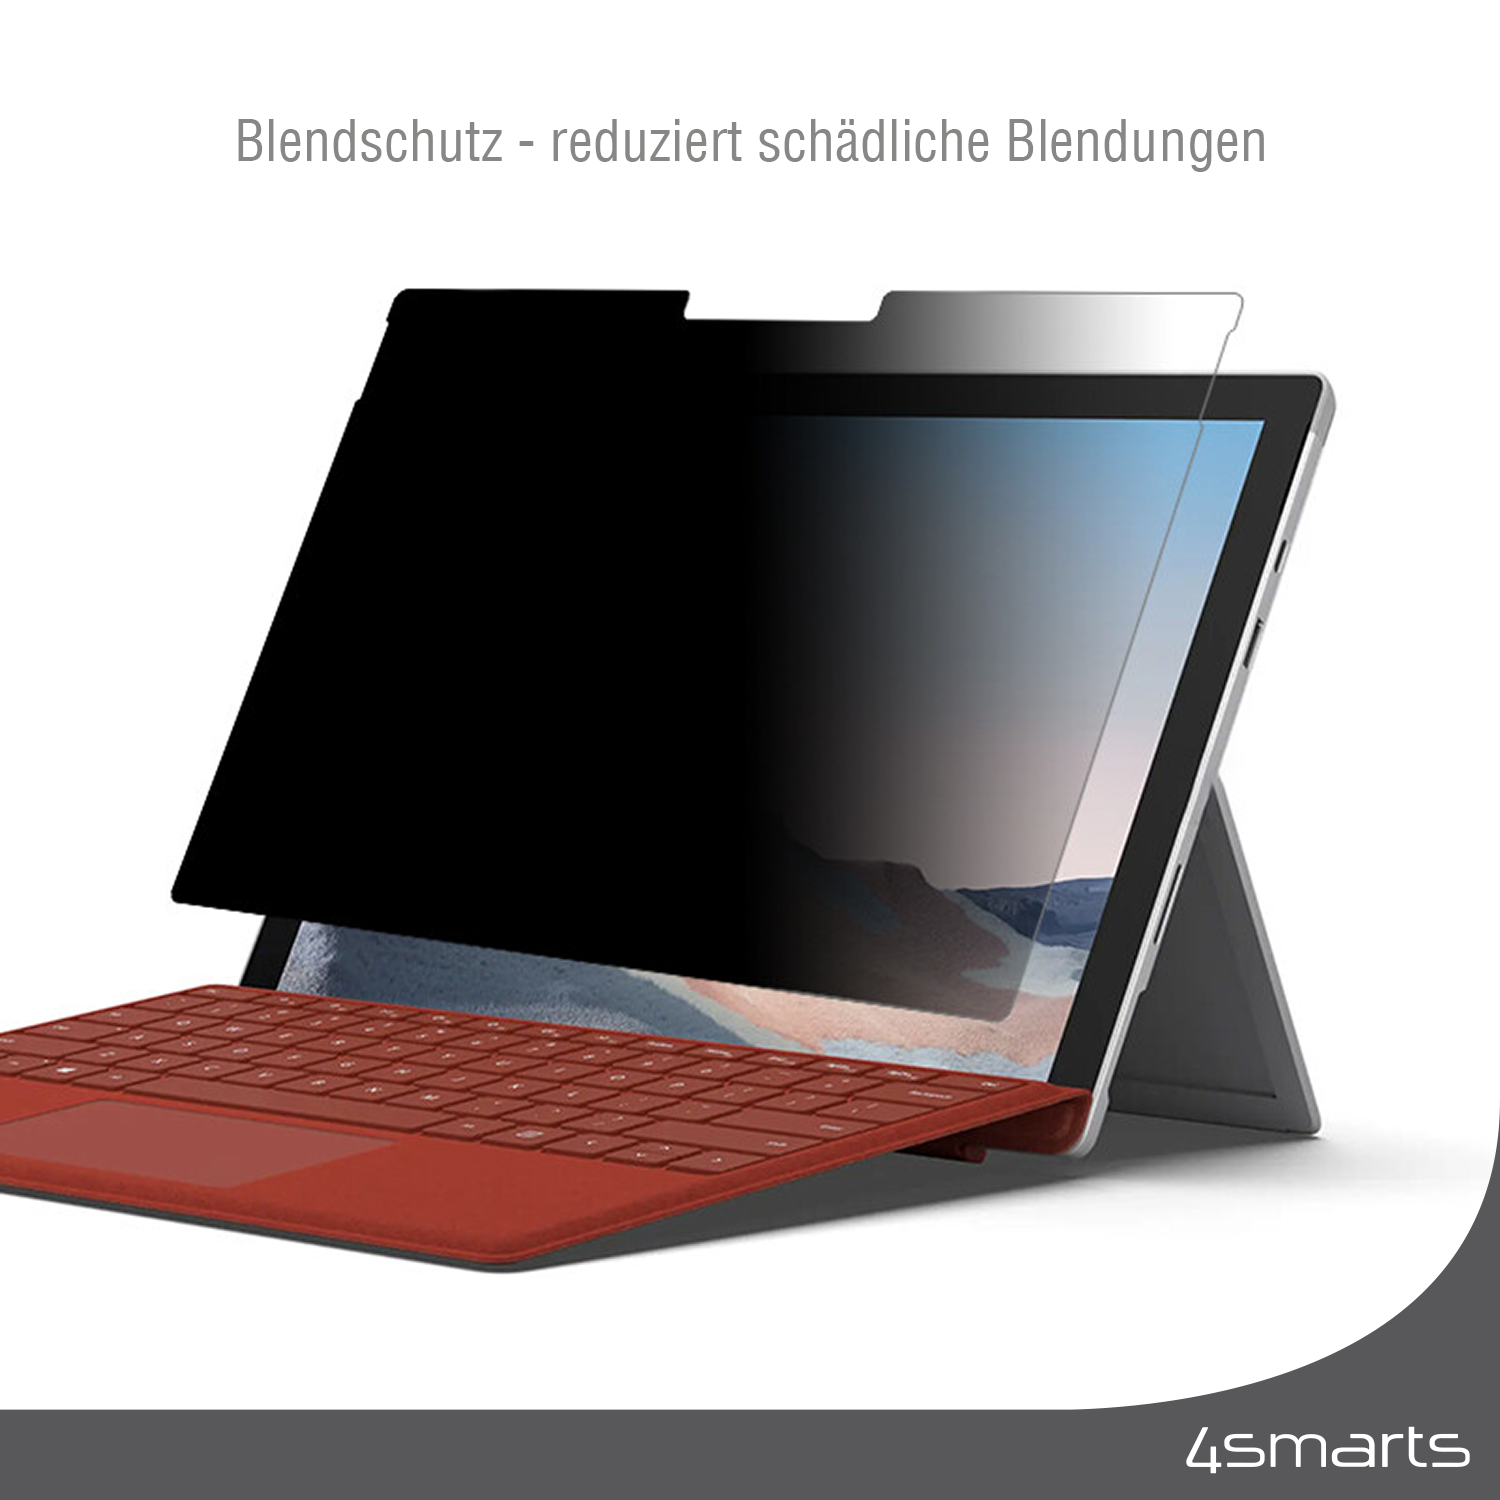 13,5 Zoll) Smartprotect Microsoft Surface 4 Laptop Displayschutzfolie(für Privacy 4SMARTS Filter